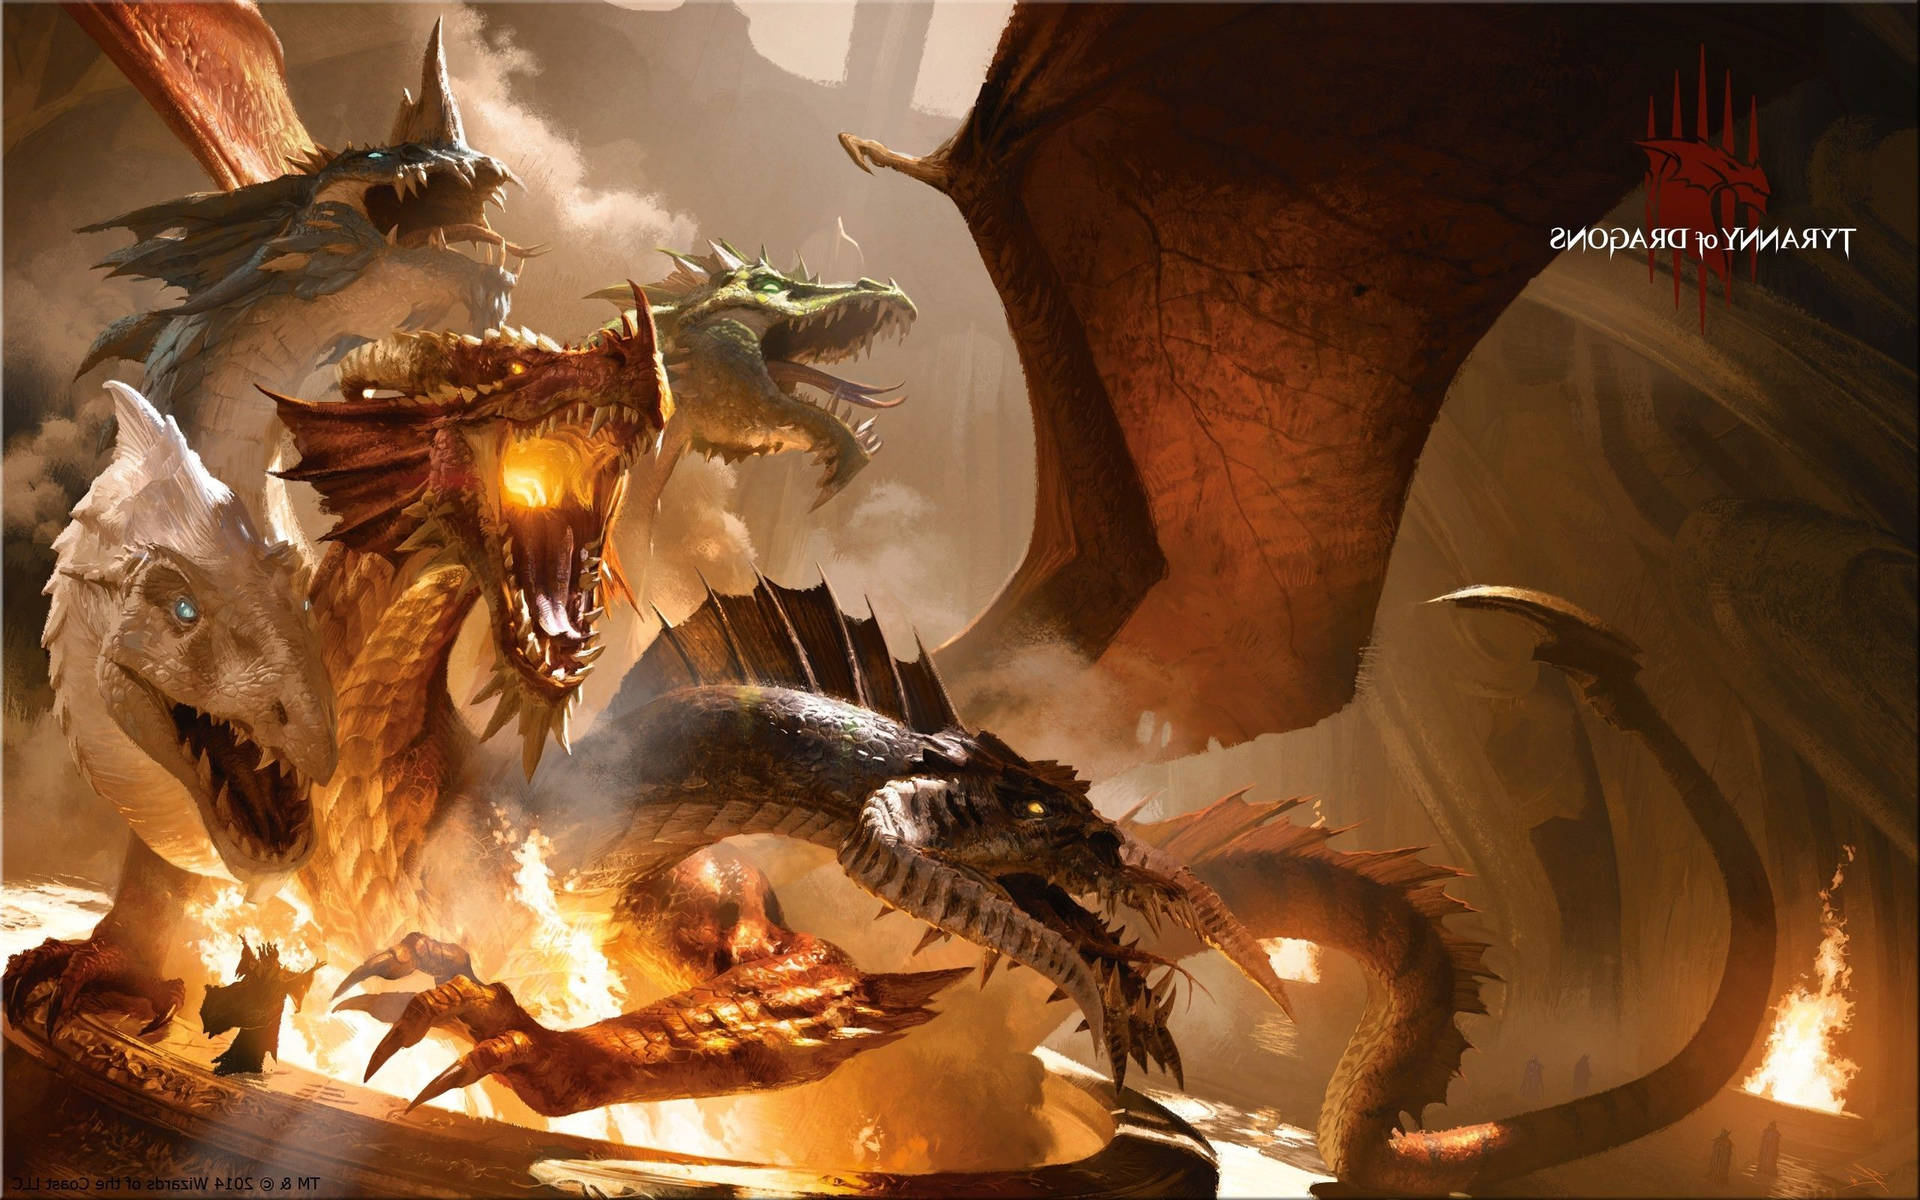 Epic Dungeons&Dragons Adventurer Wallpaper